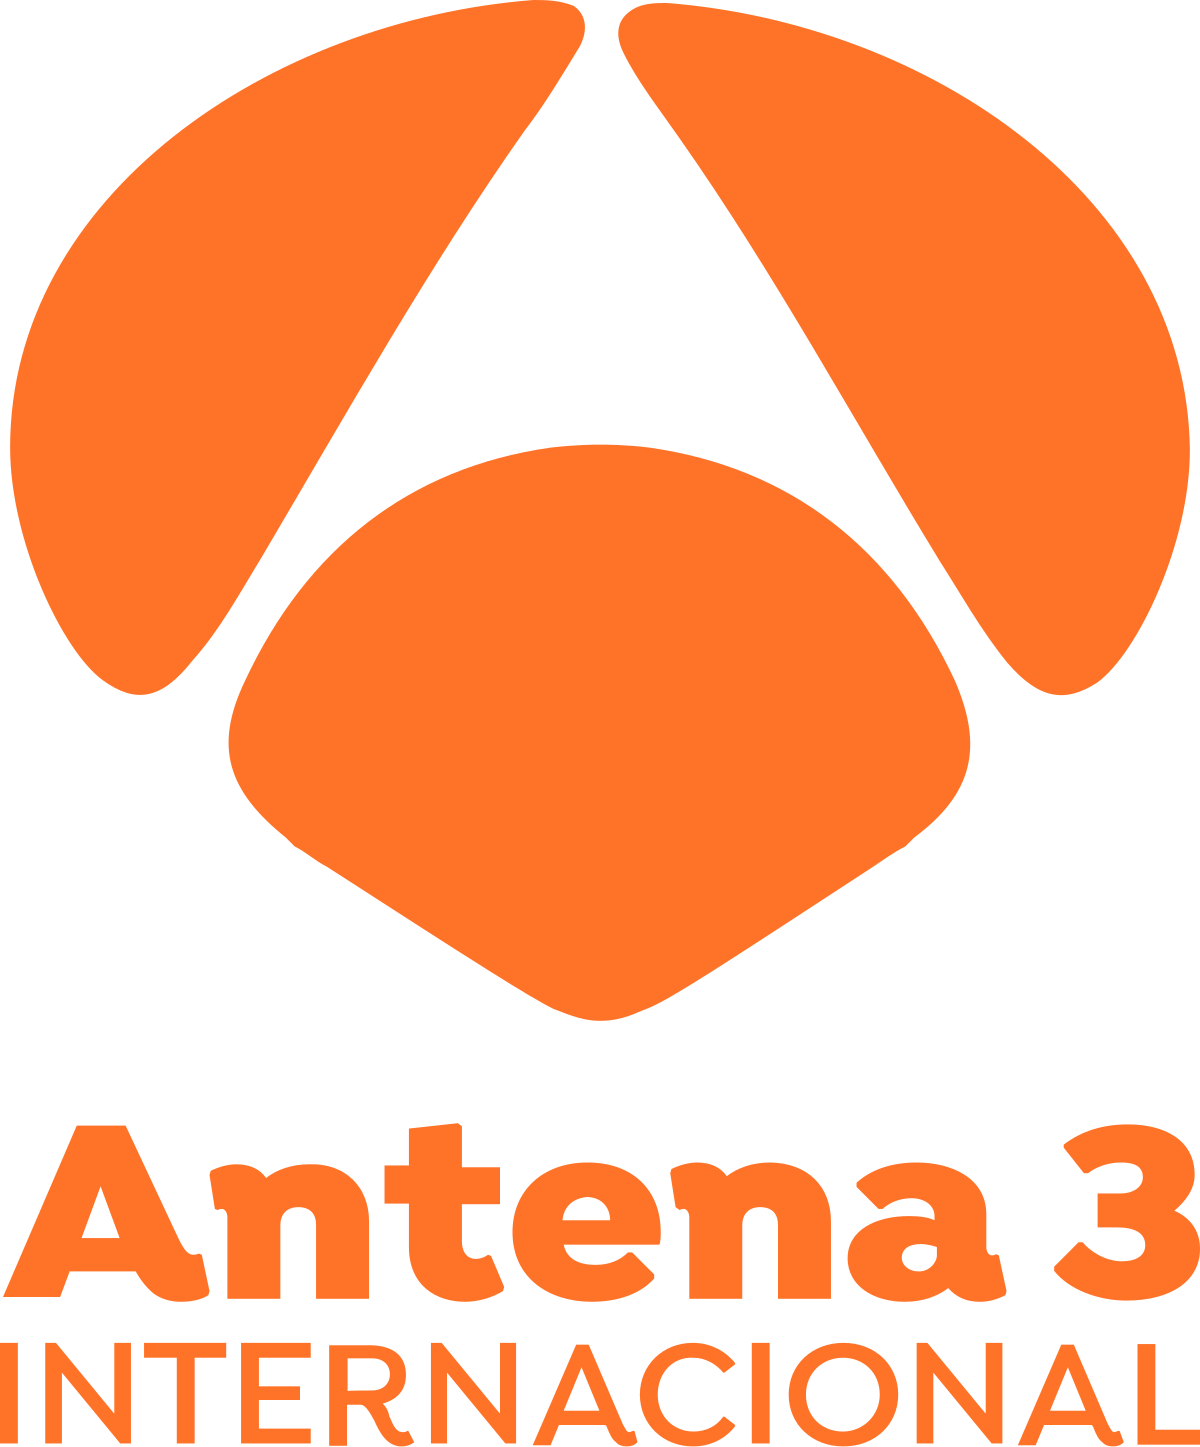 Antena 3 Internacional - Wikipedia, la enciclopedia libre